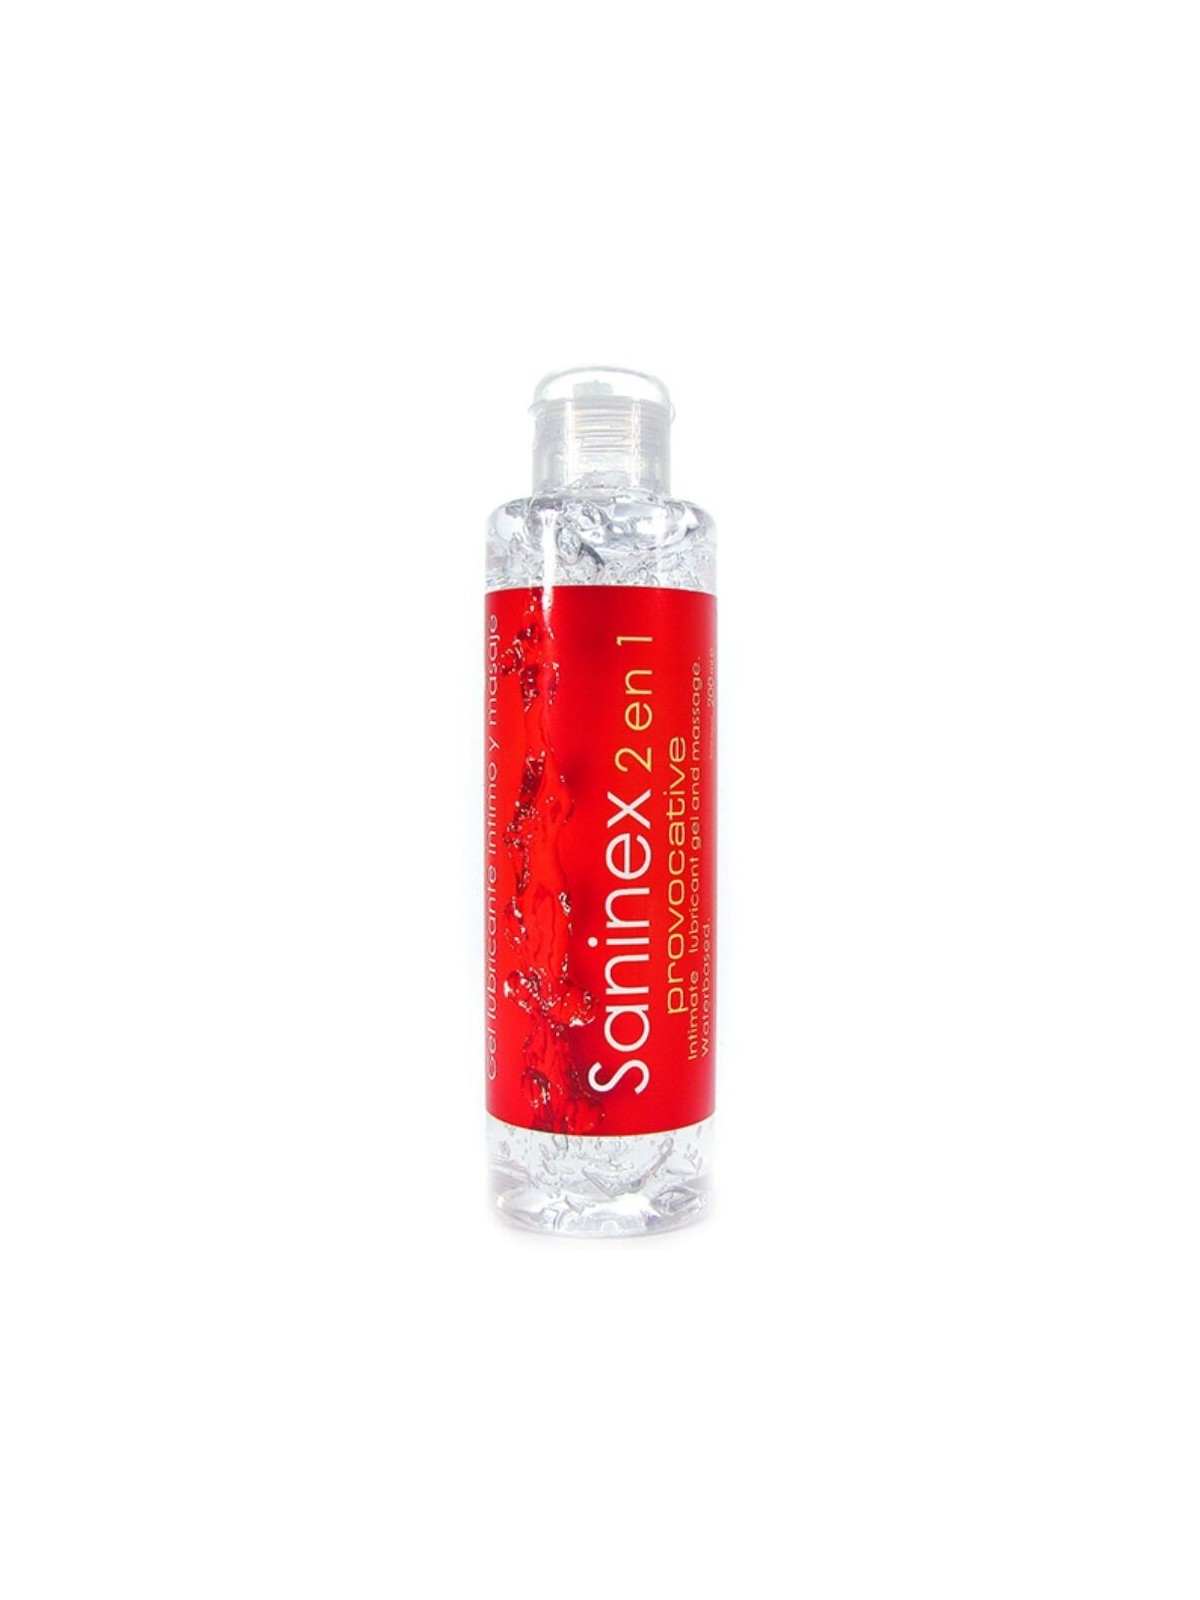 Saninex Lubricante 2 En 1 Provocative 200 ml - Comprar Crema masaje sexual Saninex - Lubricantes base agua (1)